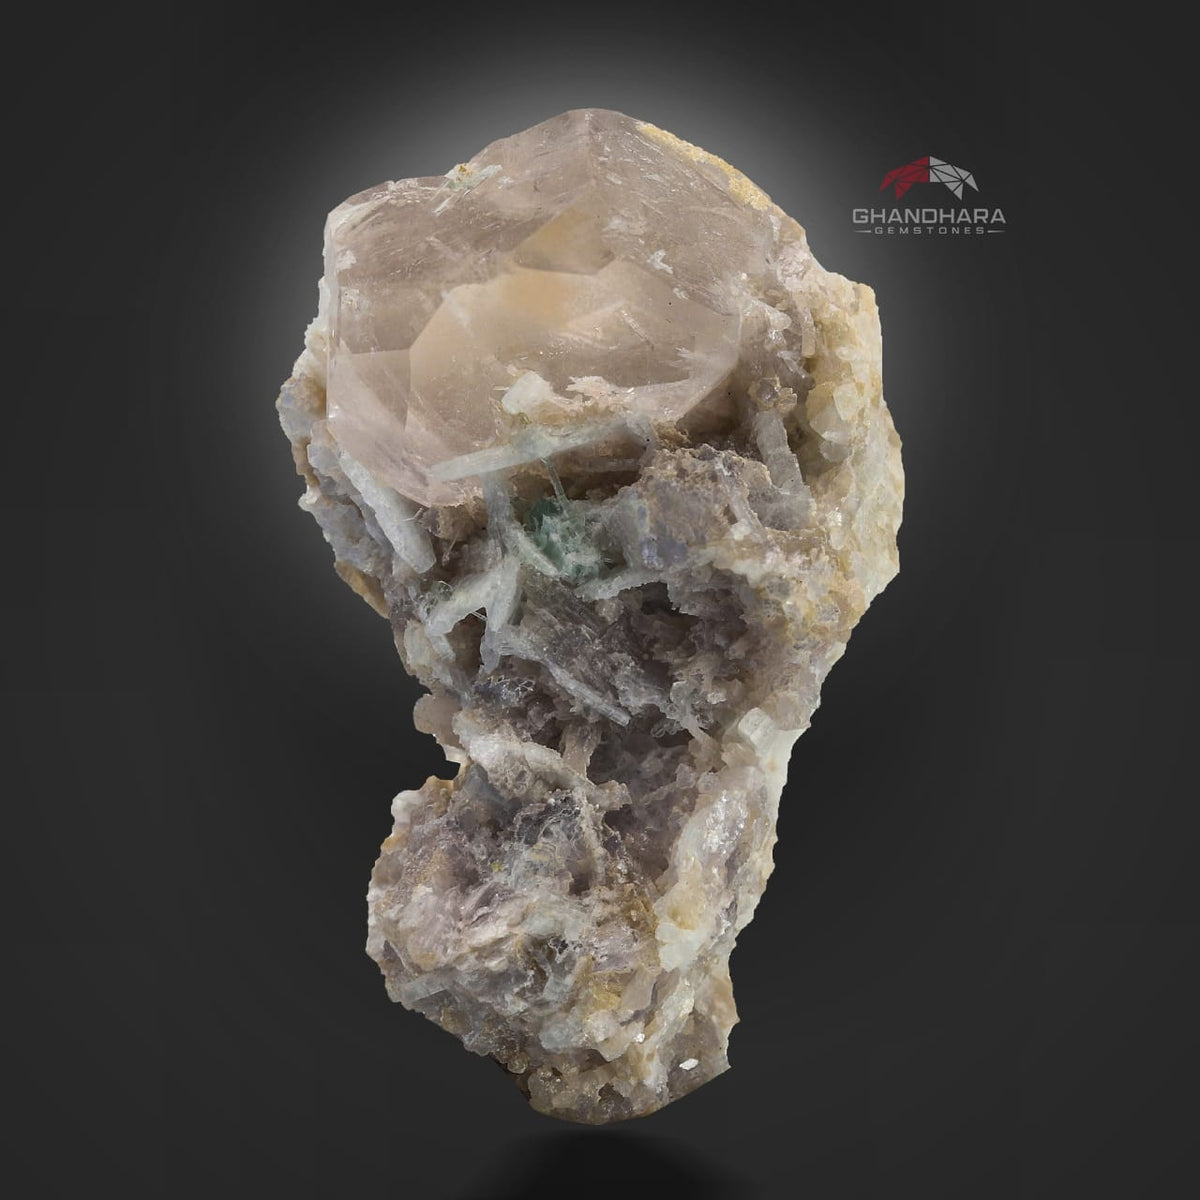 Lovely Multi Faced Morganite Focal Crystal On Lepidolite & Tourmaline